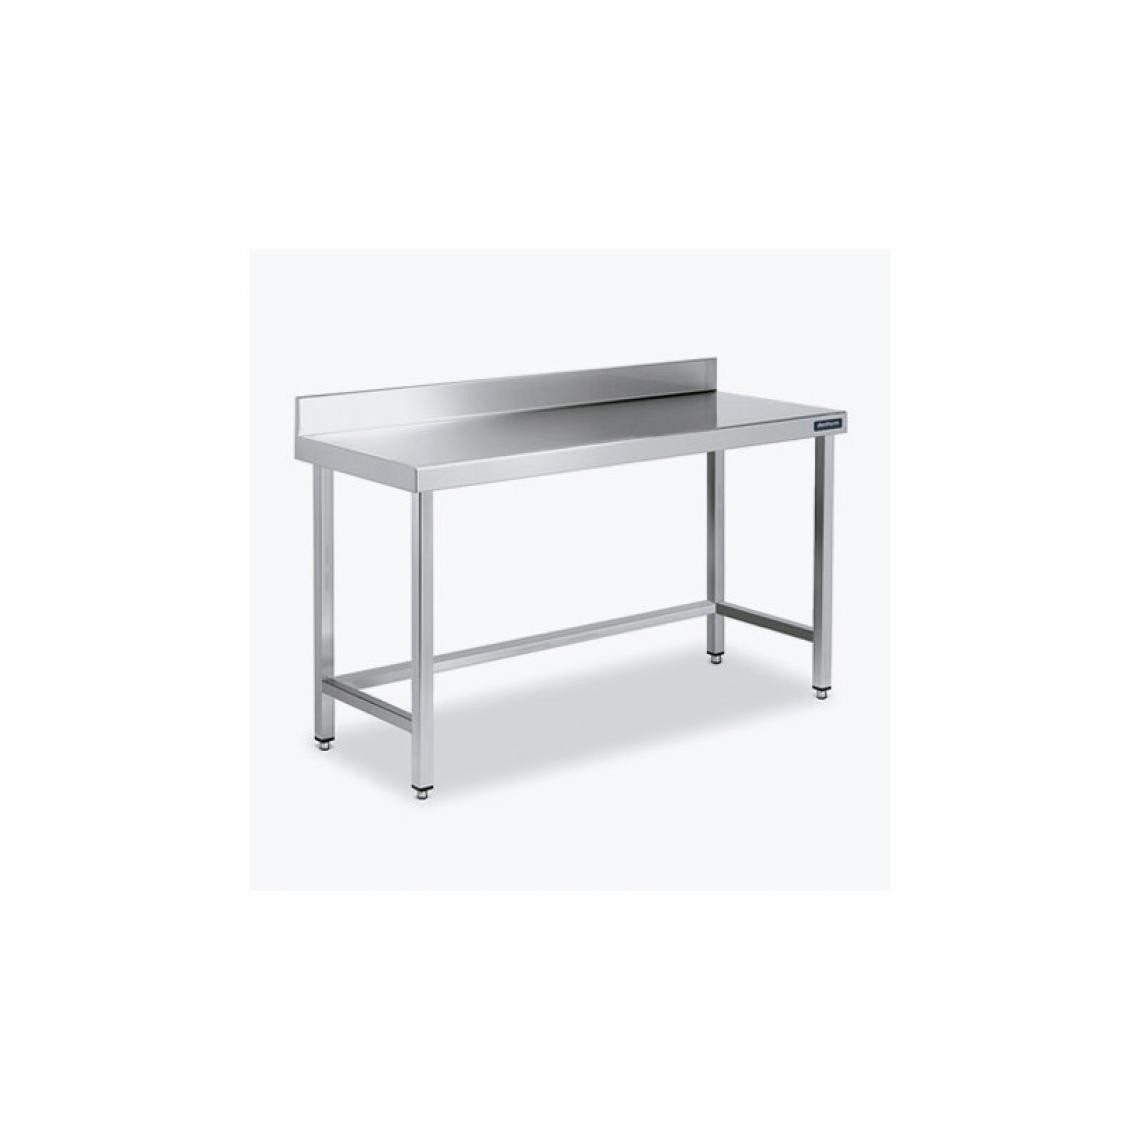 DISTFORM - Table Adossée 700x700 avec Renforts - Distform - Inox 18/102200x800x850mm - Tables à manger